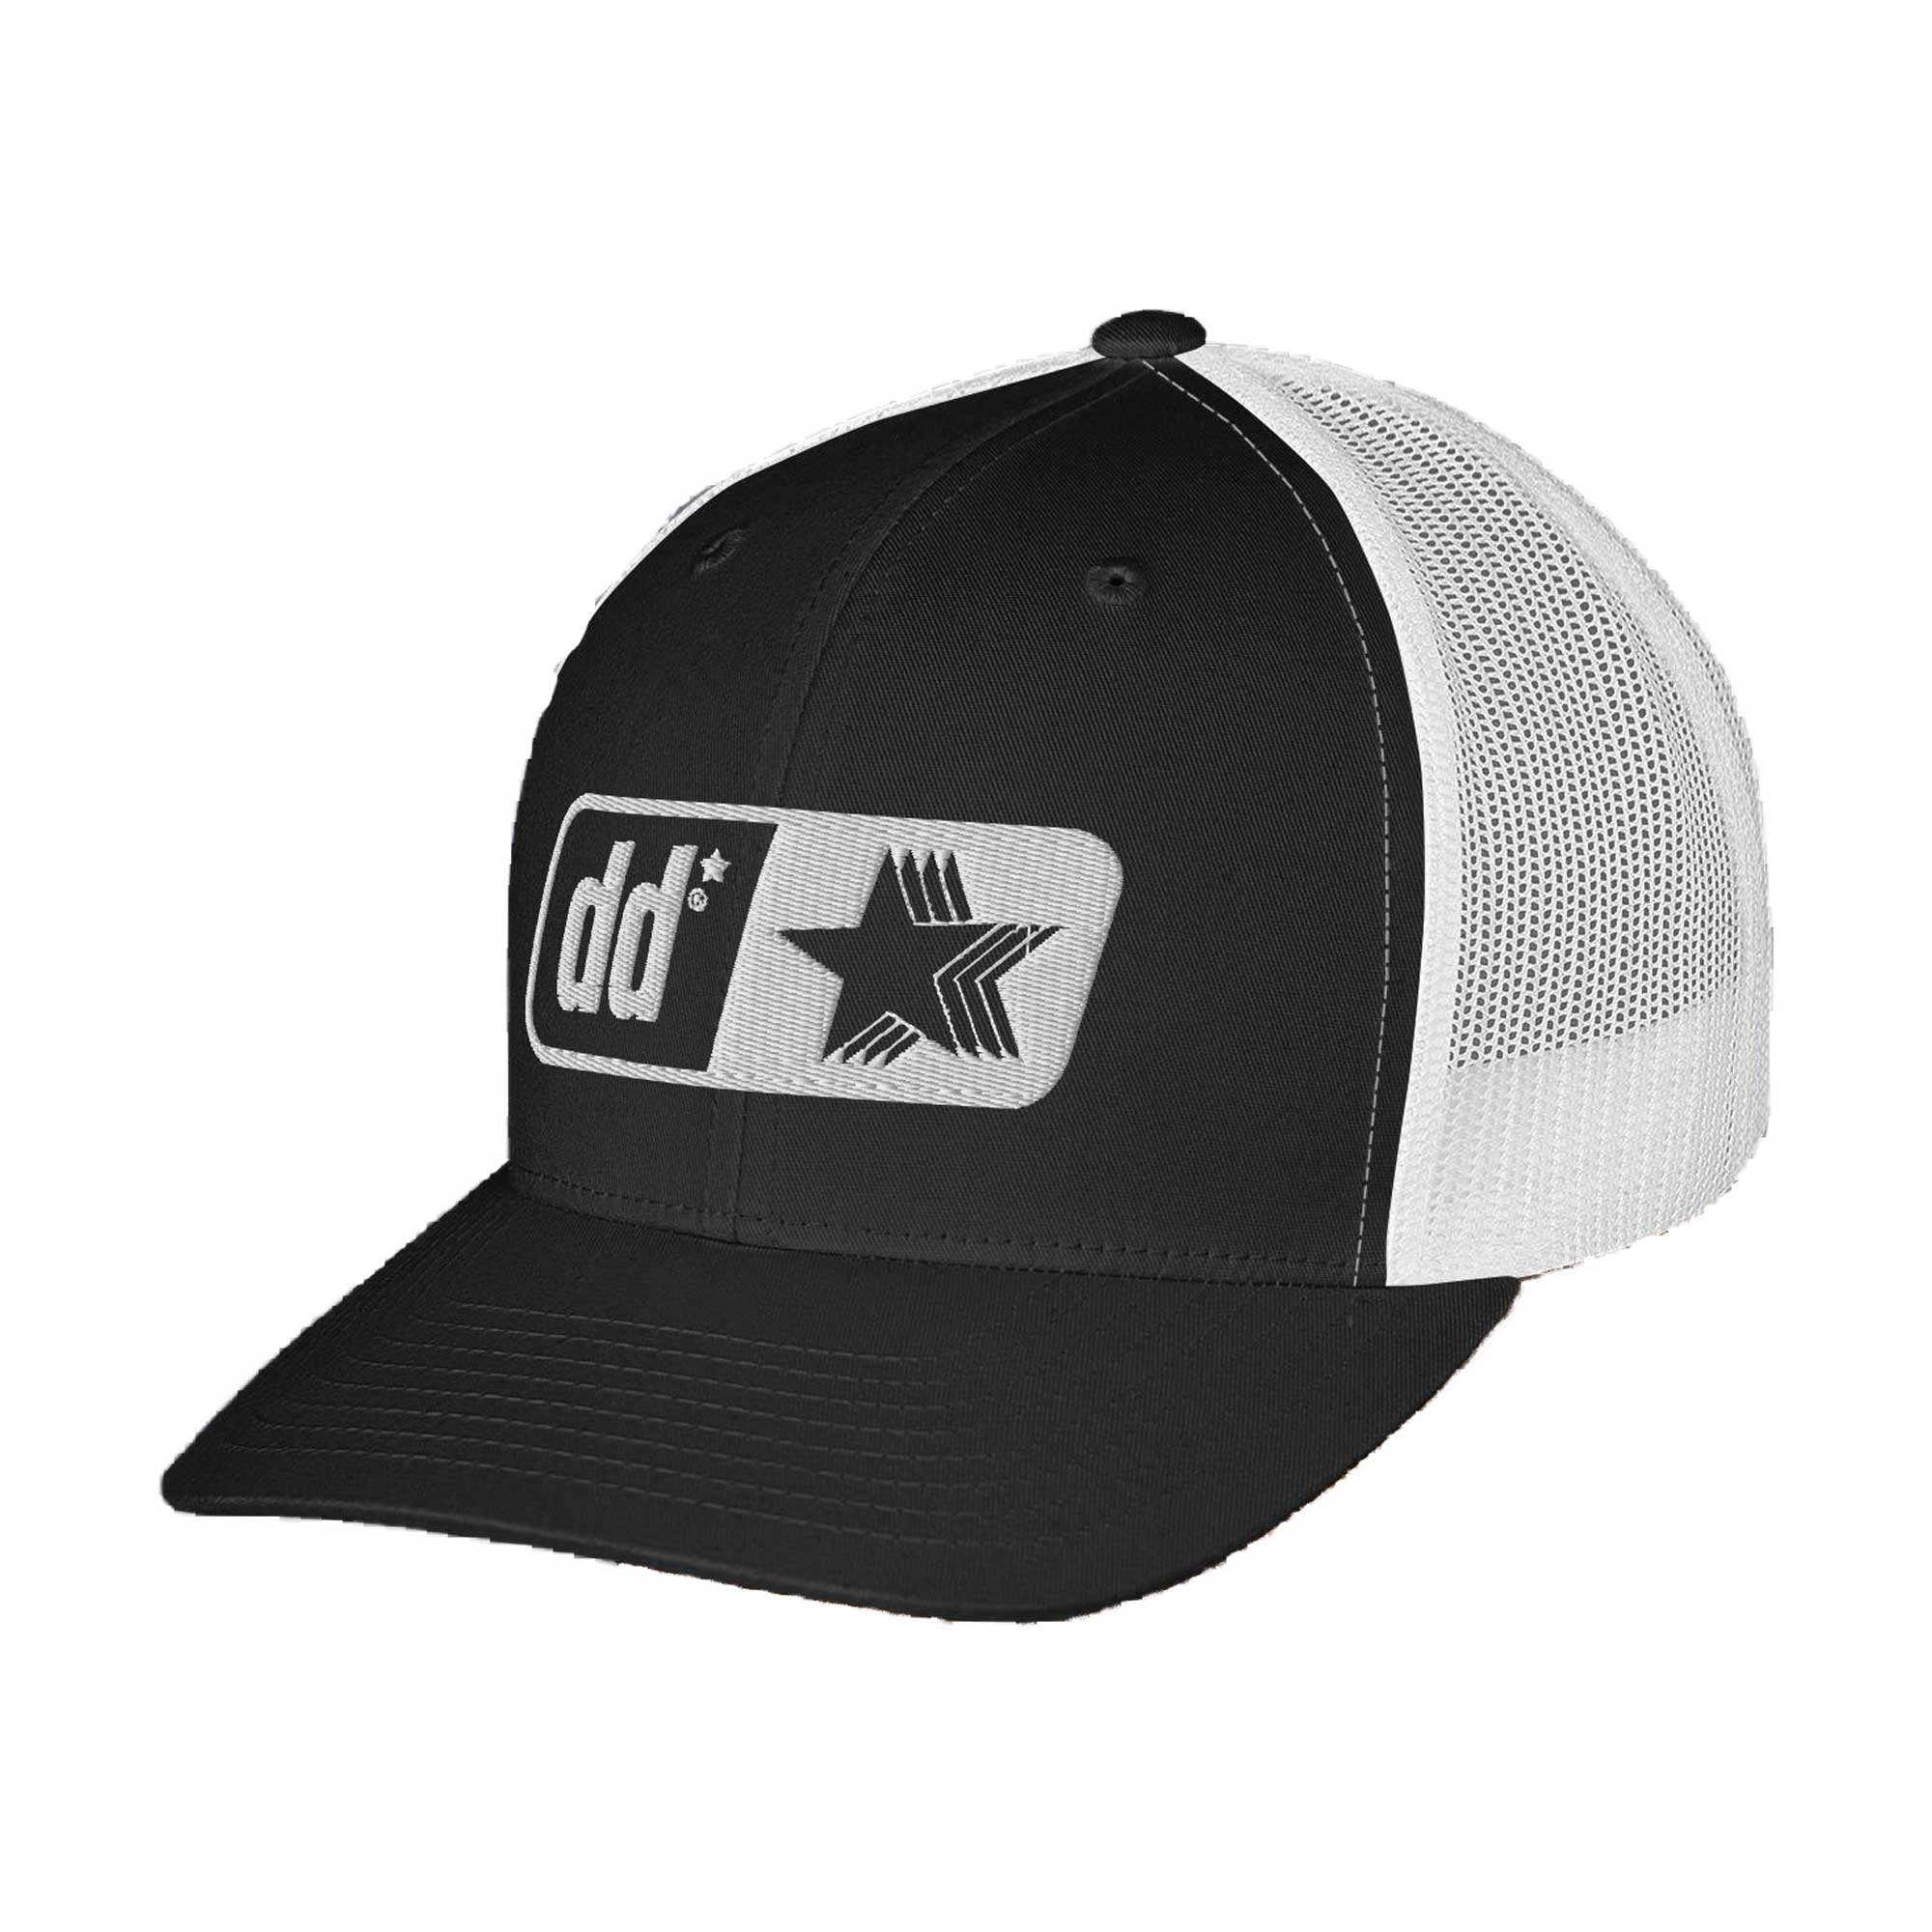 DD® Sport Mesh Trucker Hat